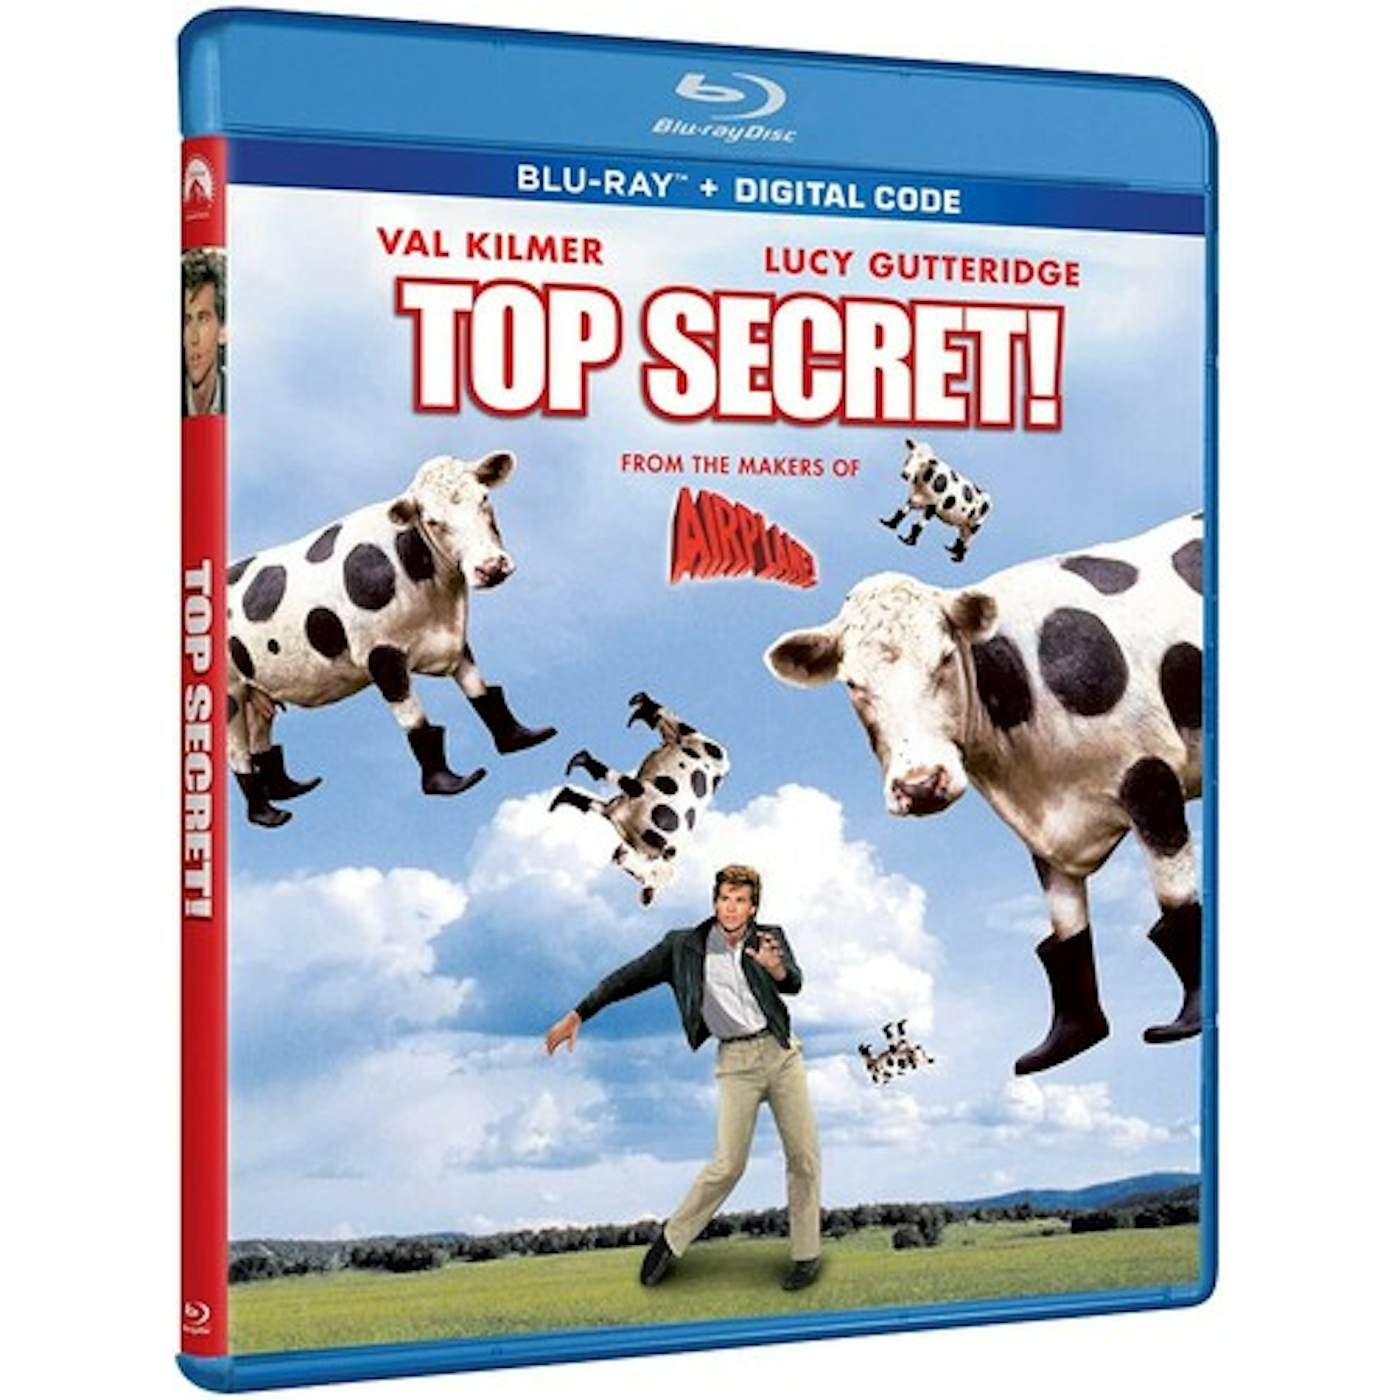 TOP SECRET Blu-ray